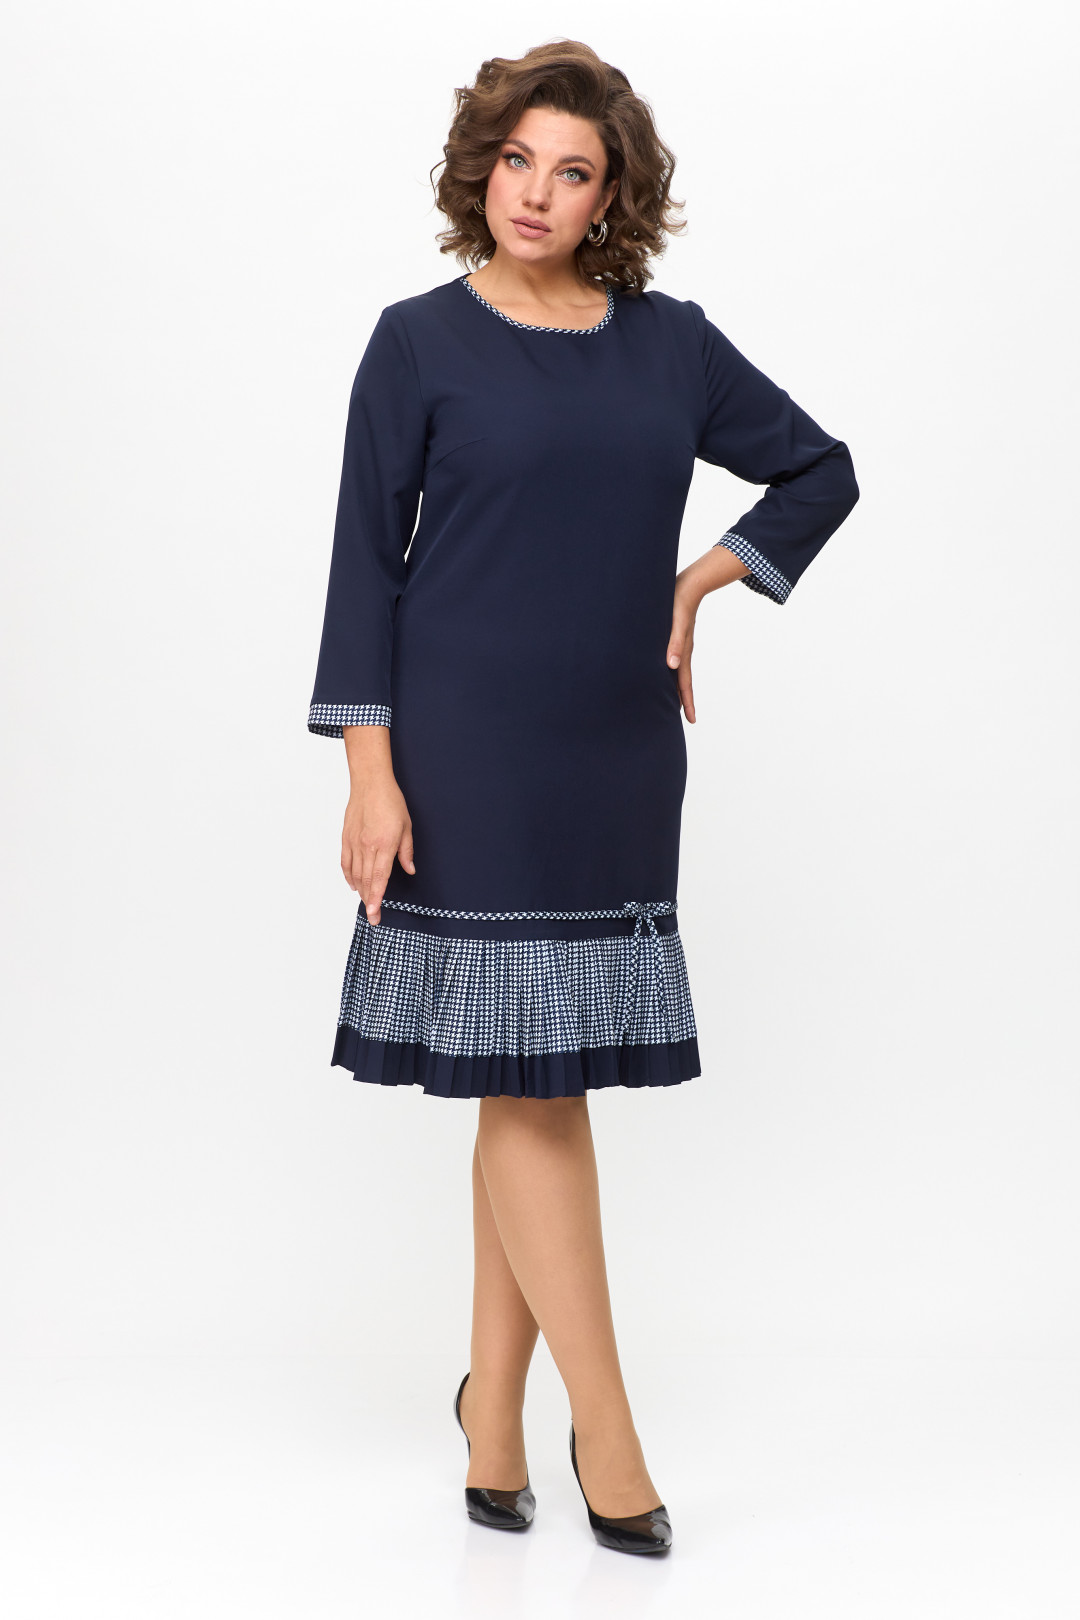 Платье Мода-Версаль 2233 т.синий